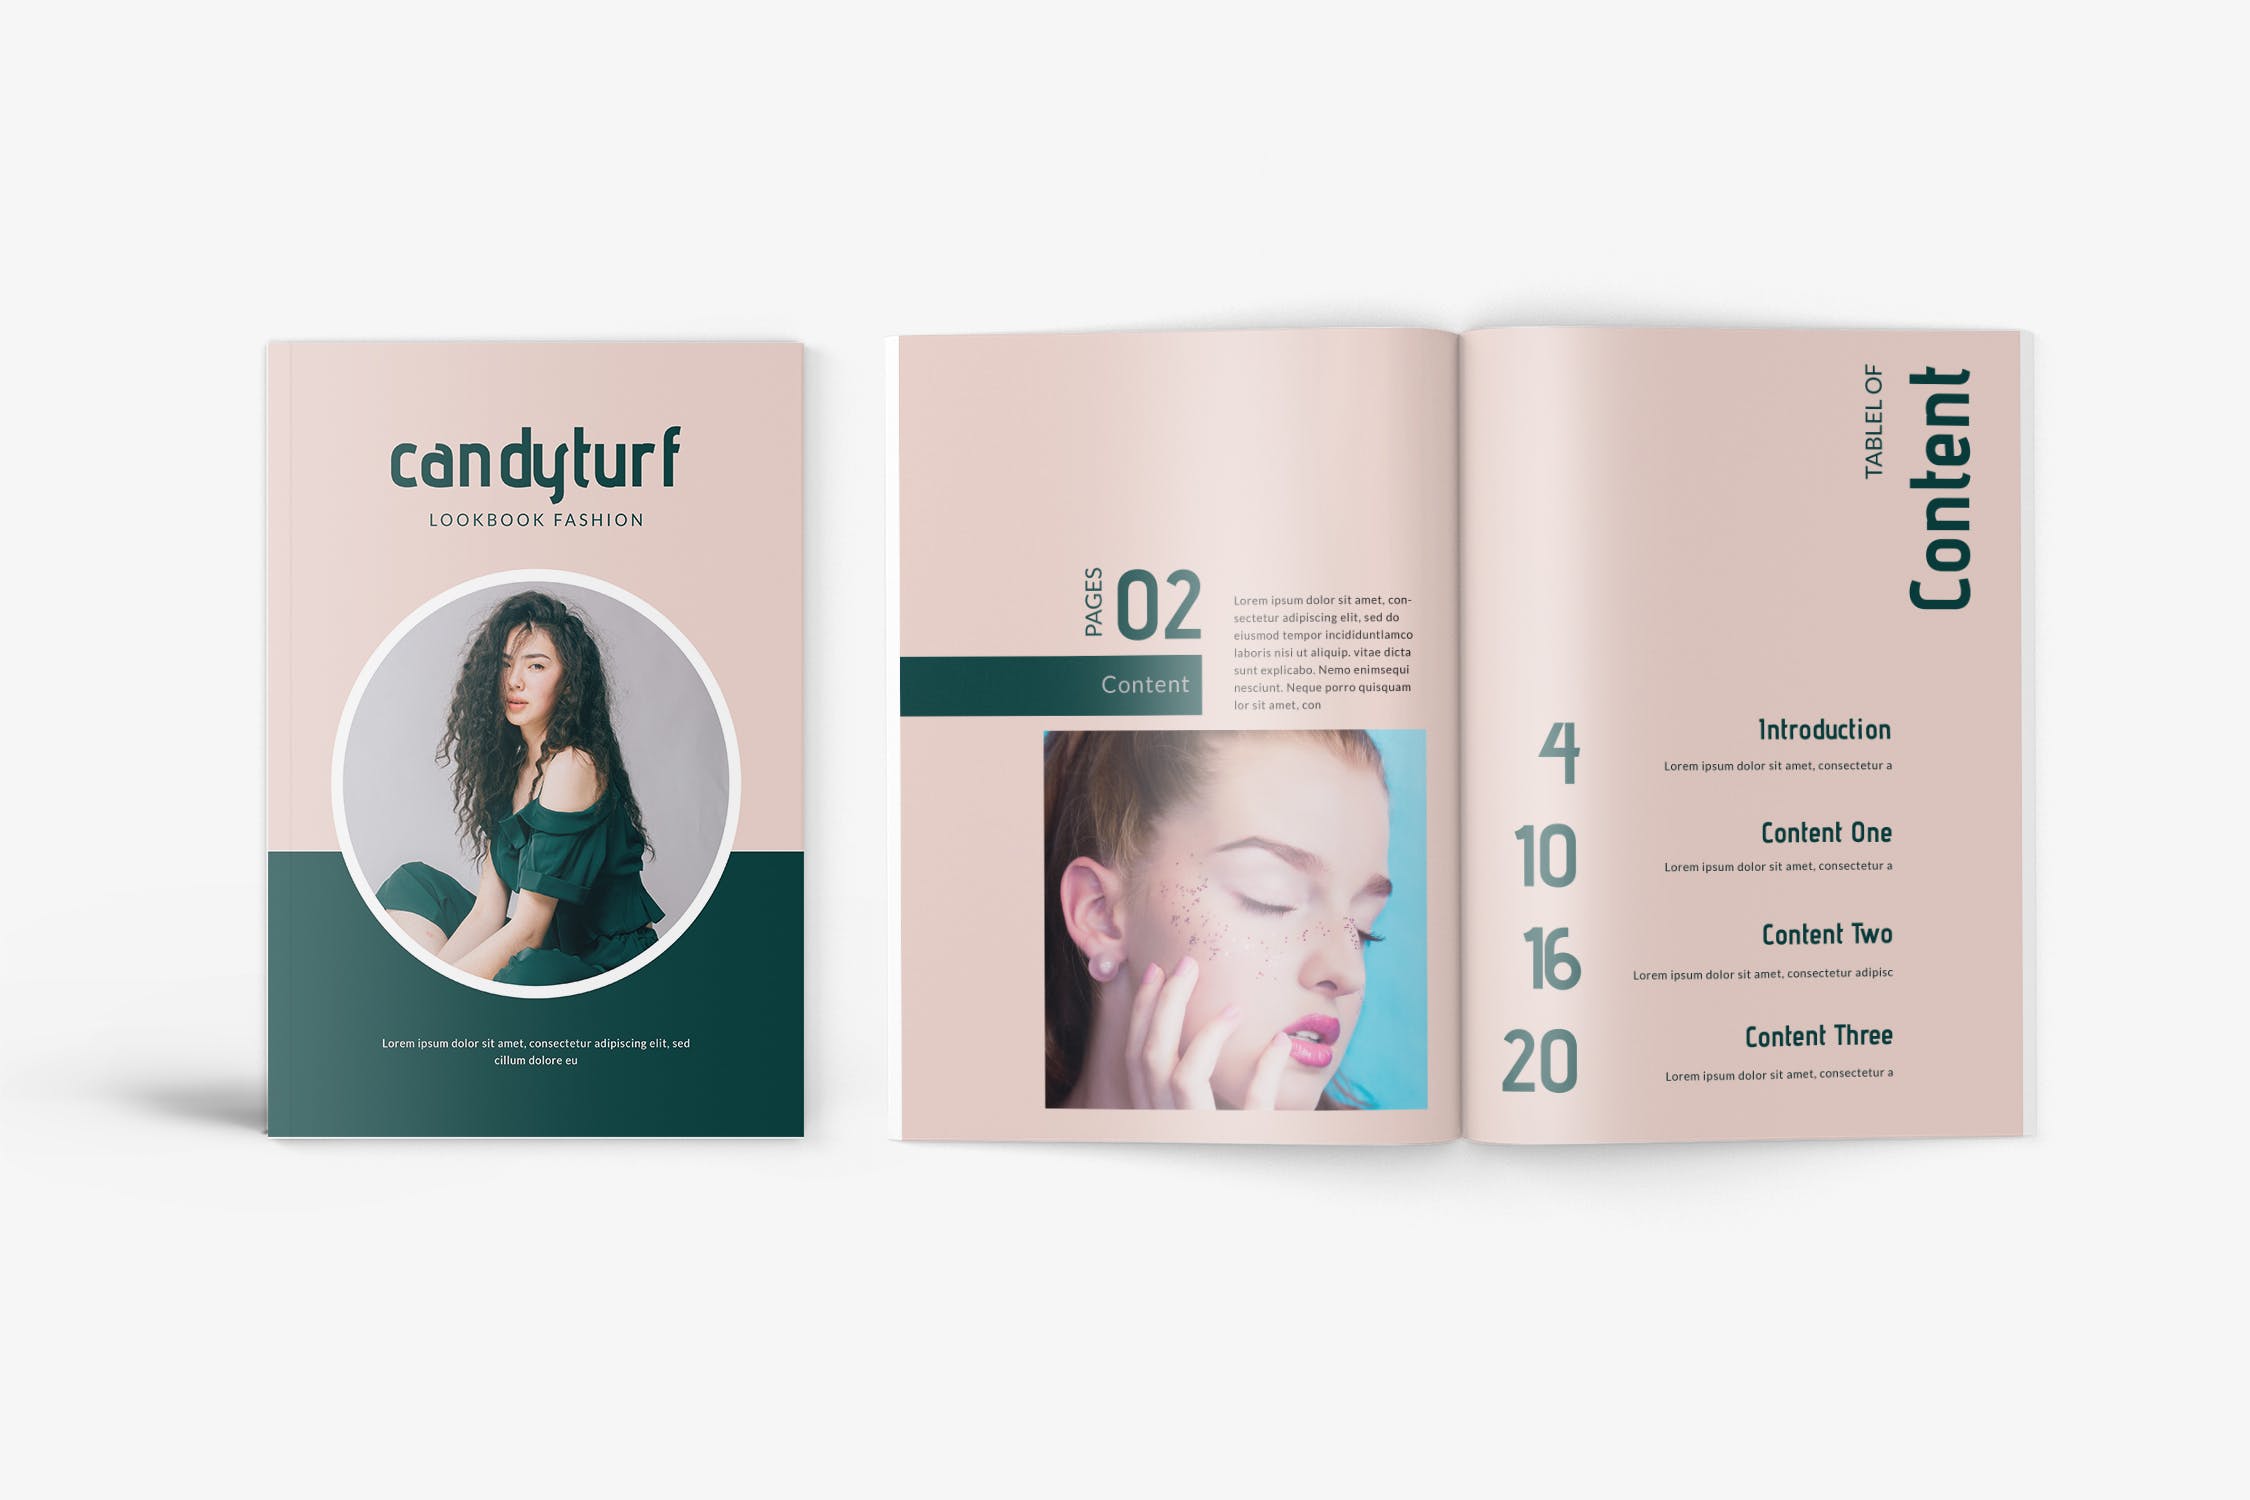 时尚服饰品牌产品16图库精选目录设计模板 Candyturf Fashion Lookbook Catalogue插图